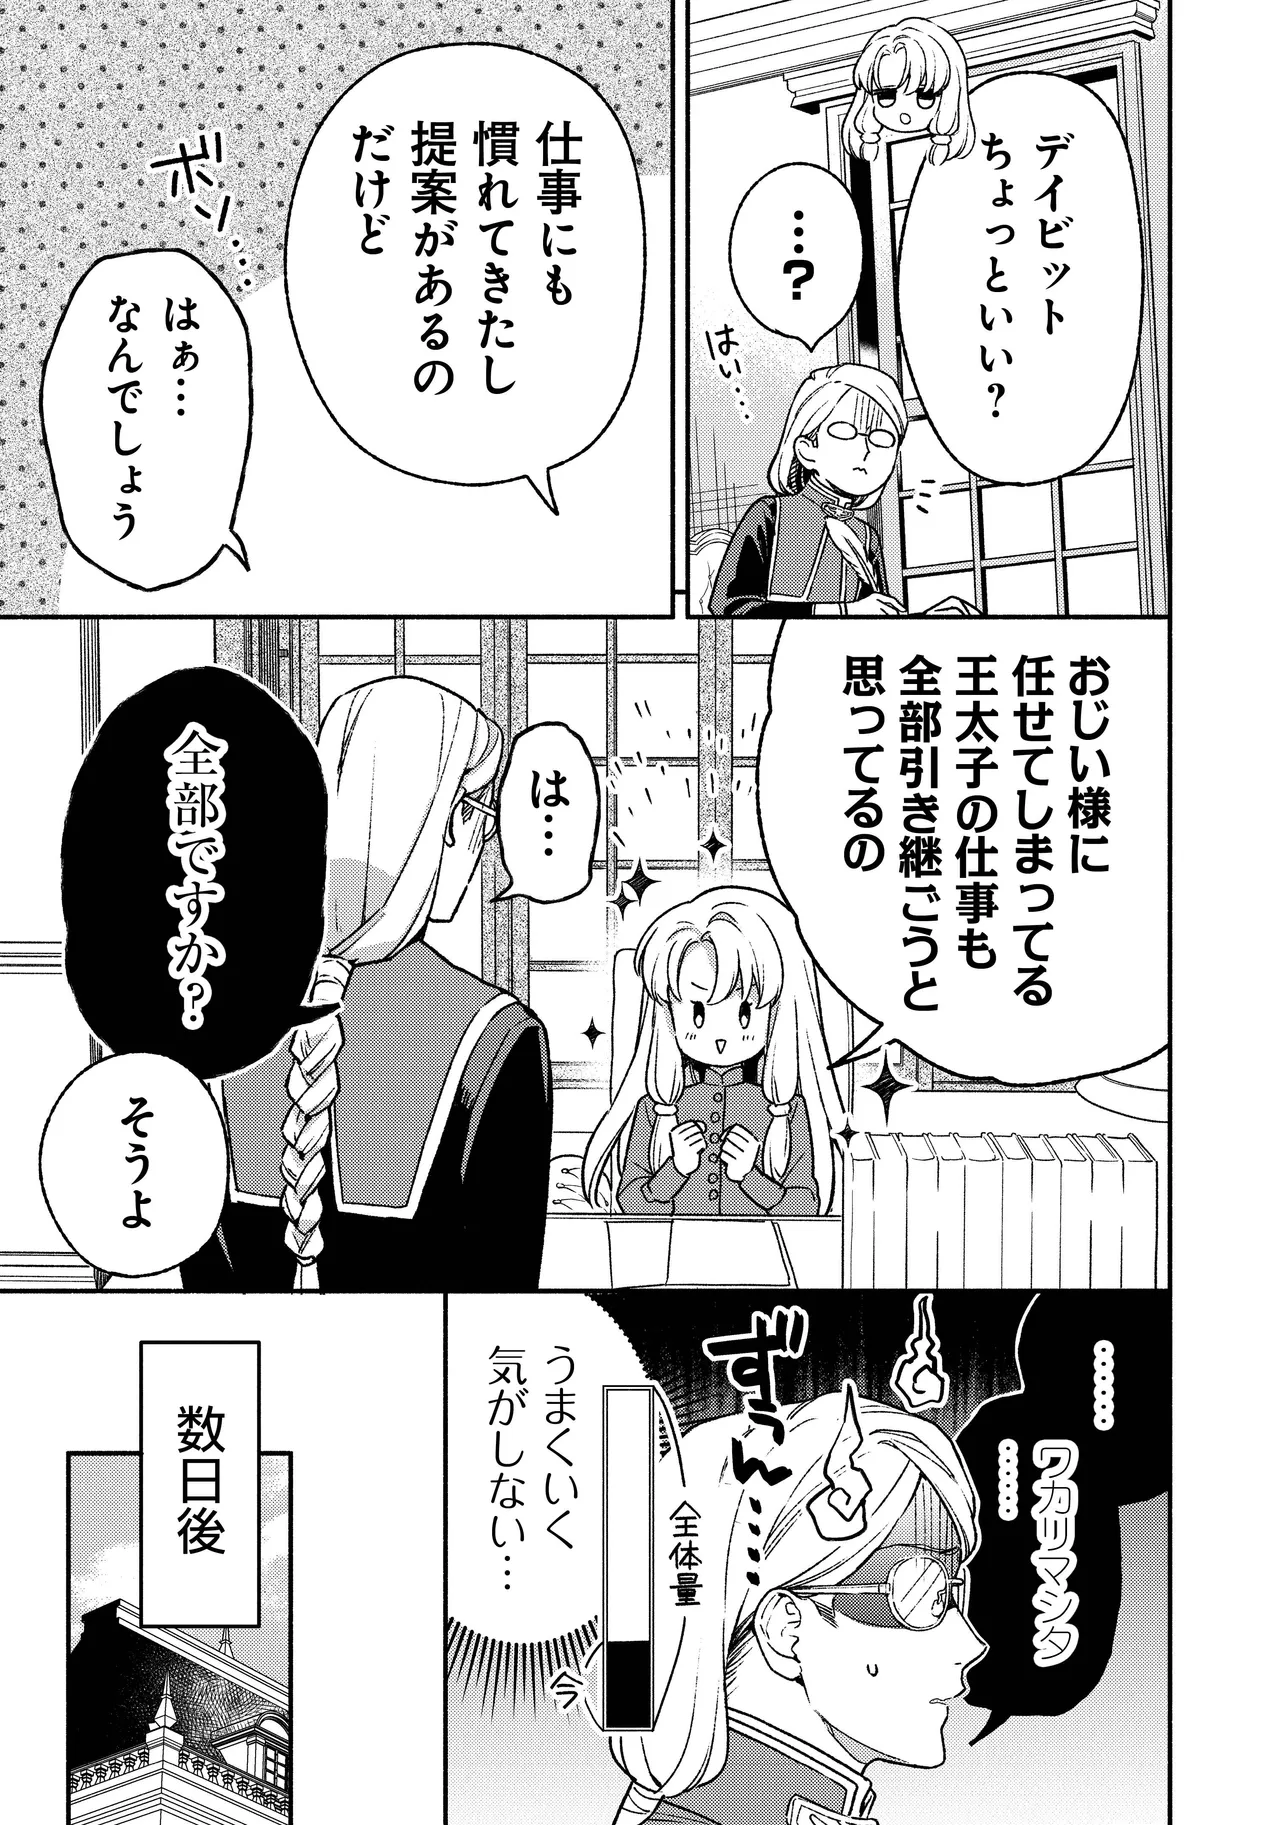 Hazure Hime wa Igaito Aisareteiru? - Chapter 4.2 - Page 6